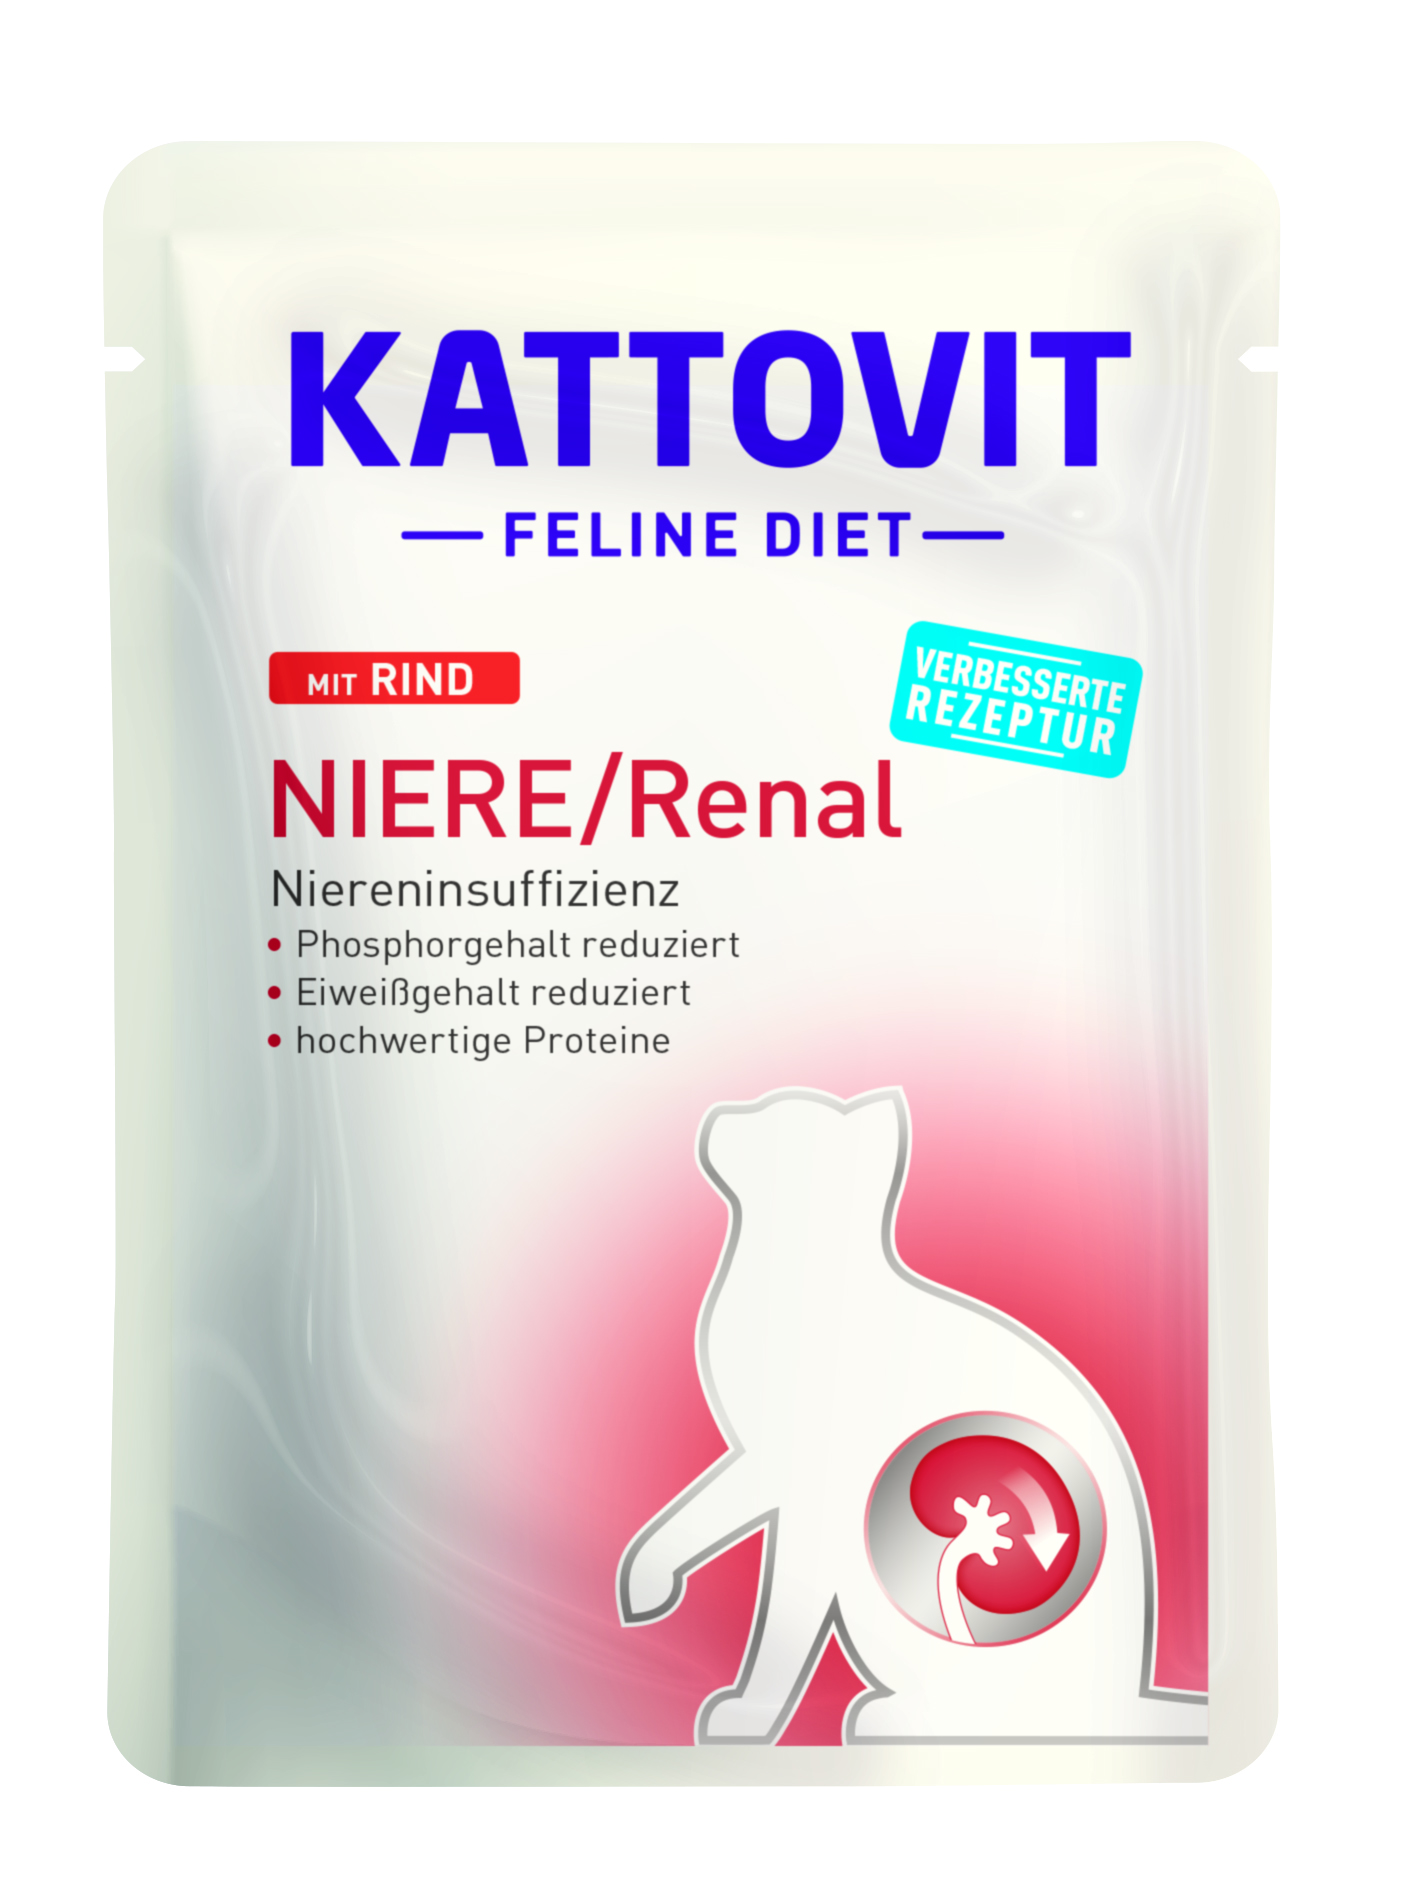 Finnern PB Kattovit Feline Diet Niere/Renal Rind 85g